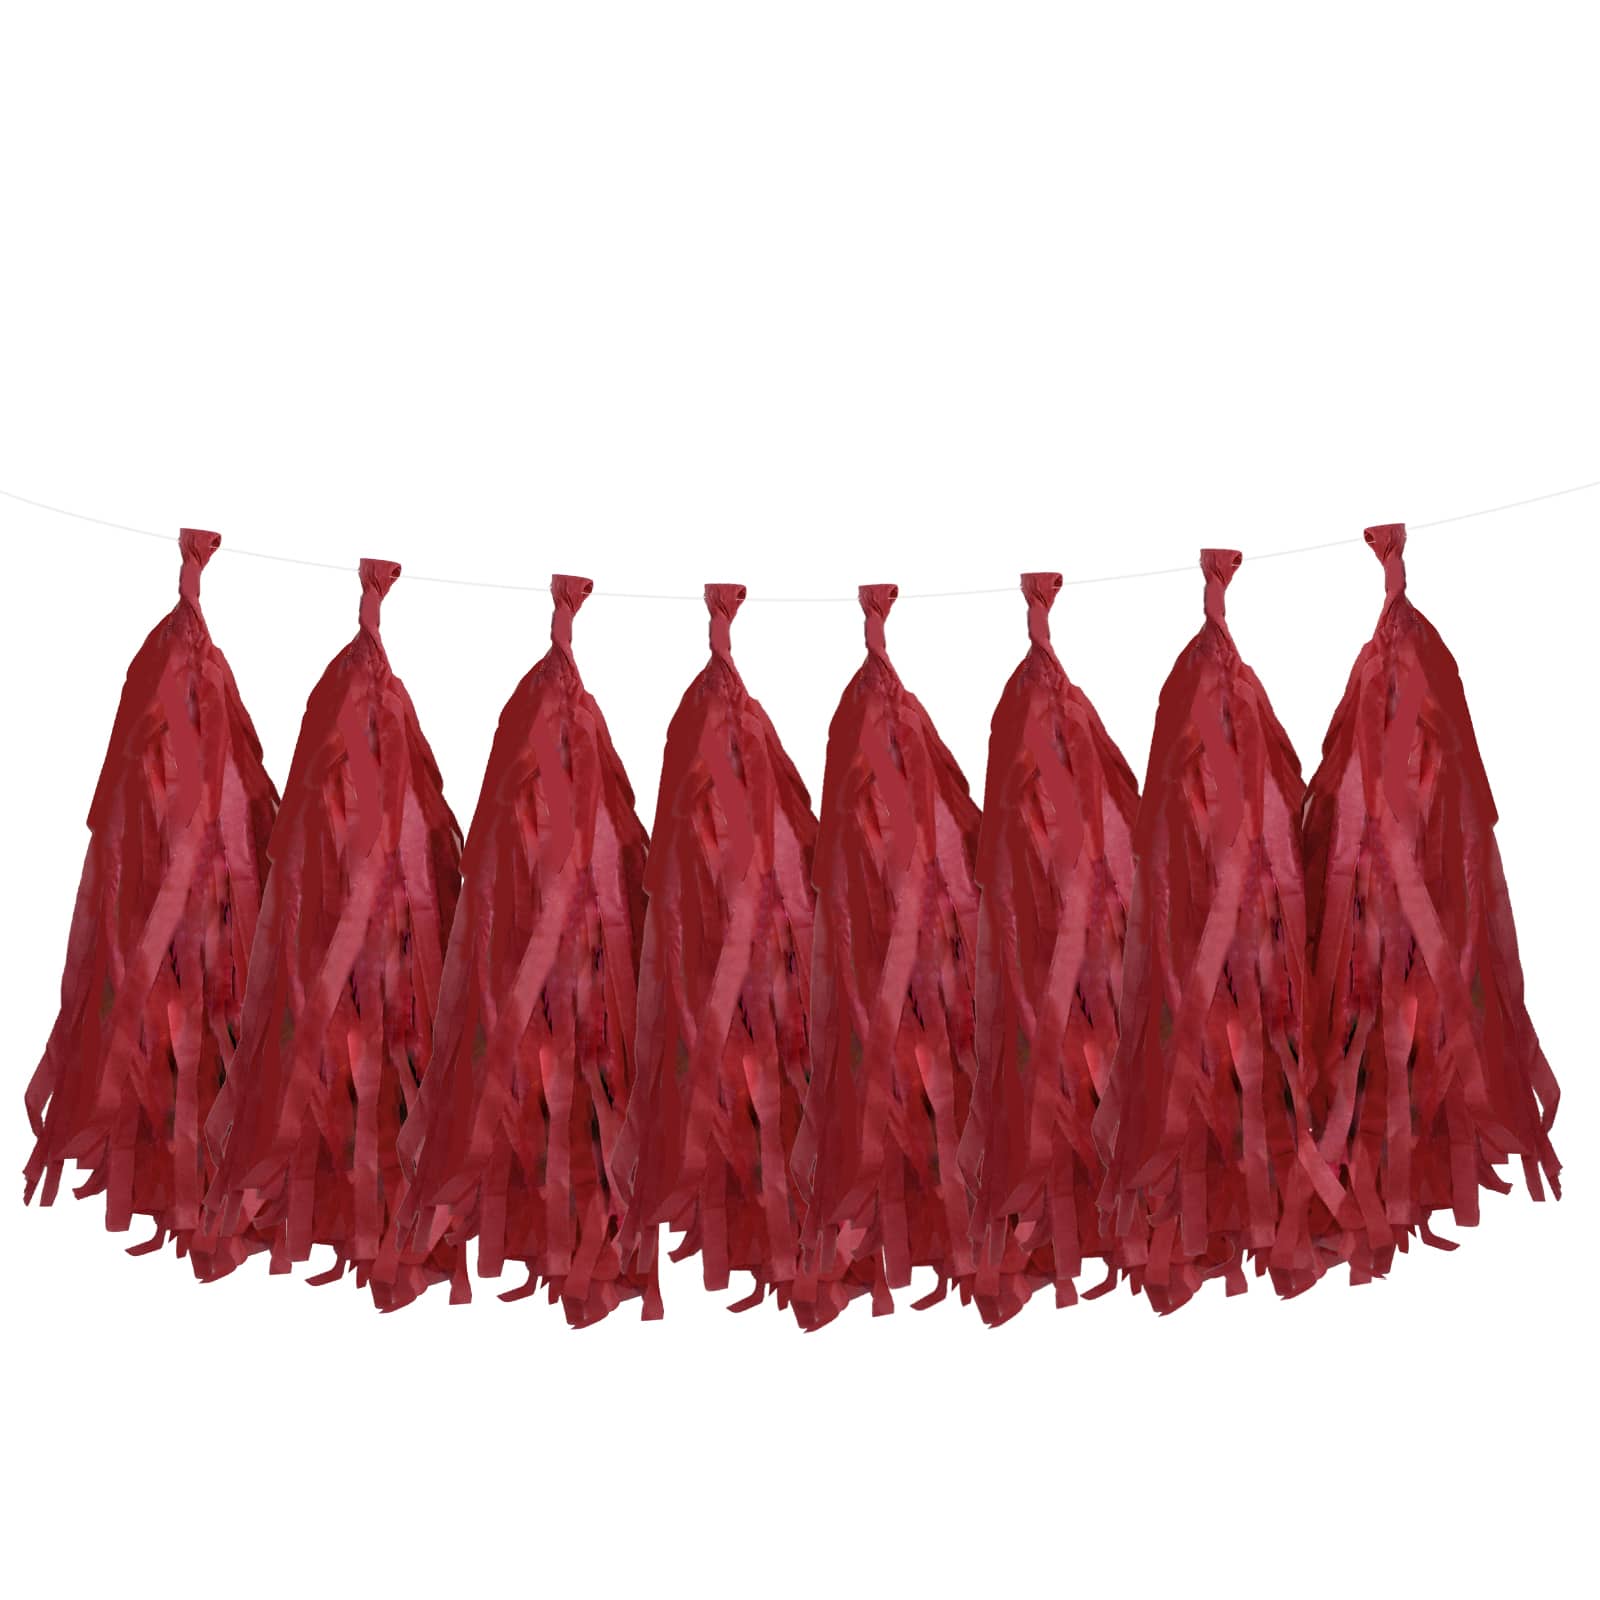 12 Pack: Red Tissue Tassel Garland by Celebrate It&#x2122;